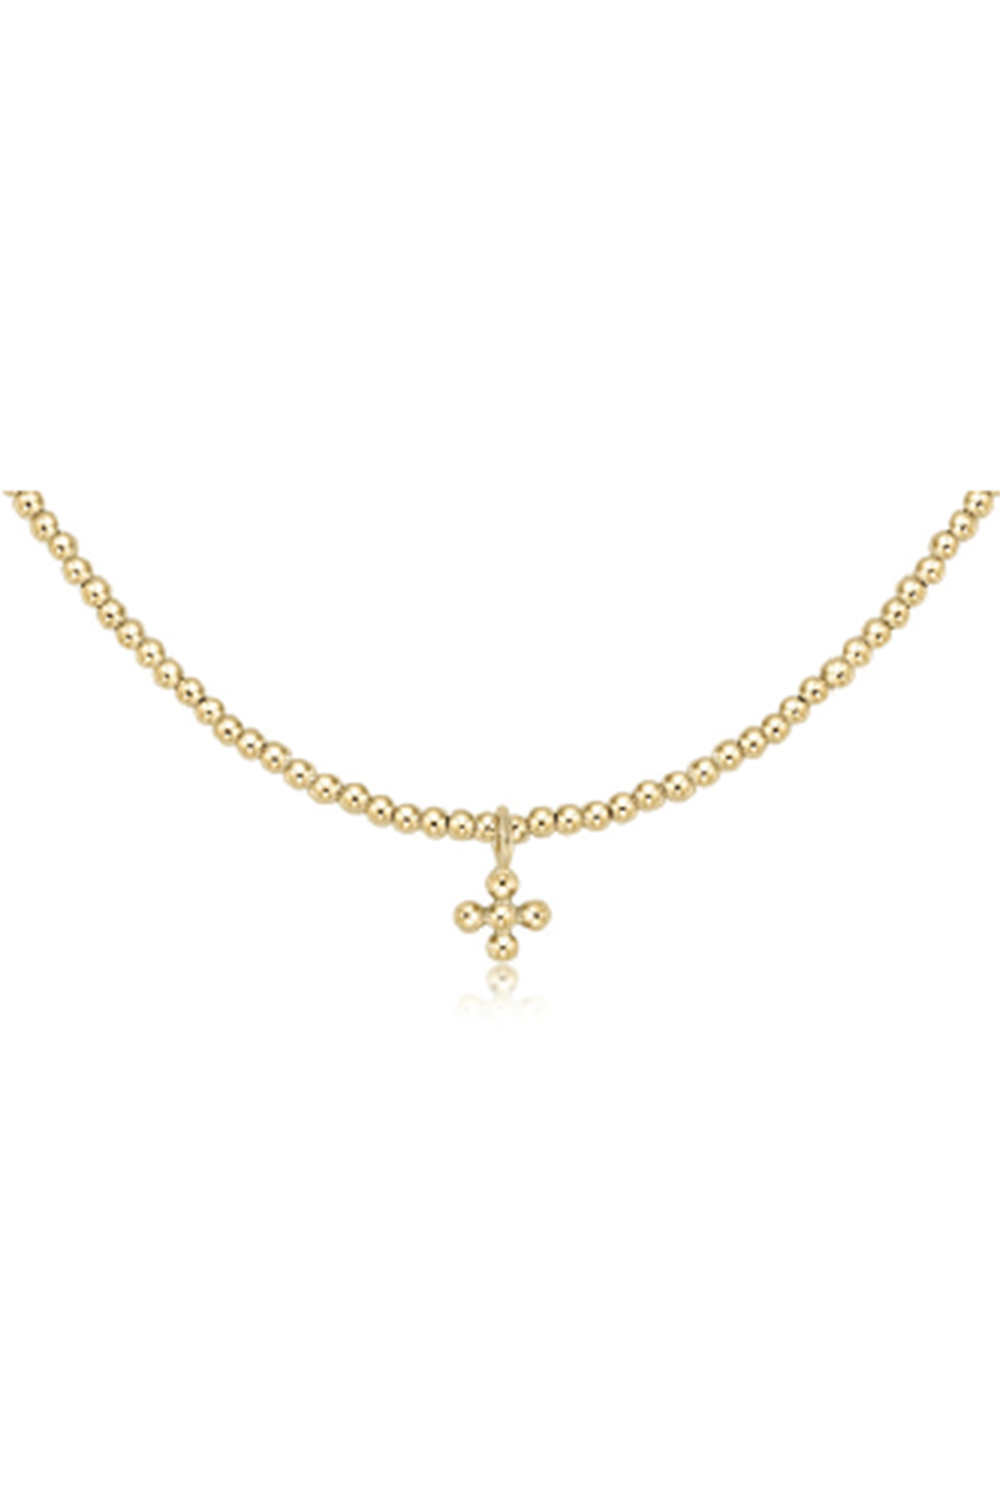 EN Classic Beaded Cross Necklace - Gold